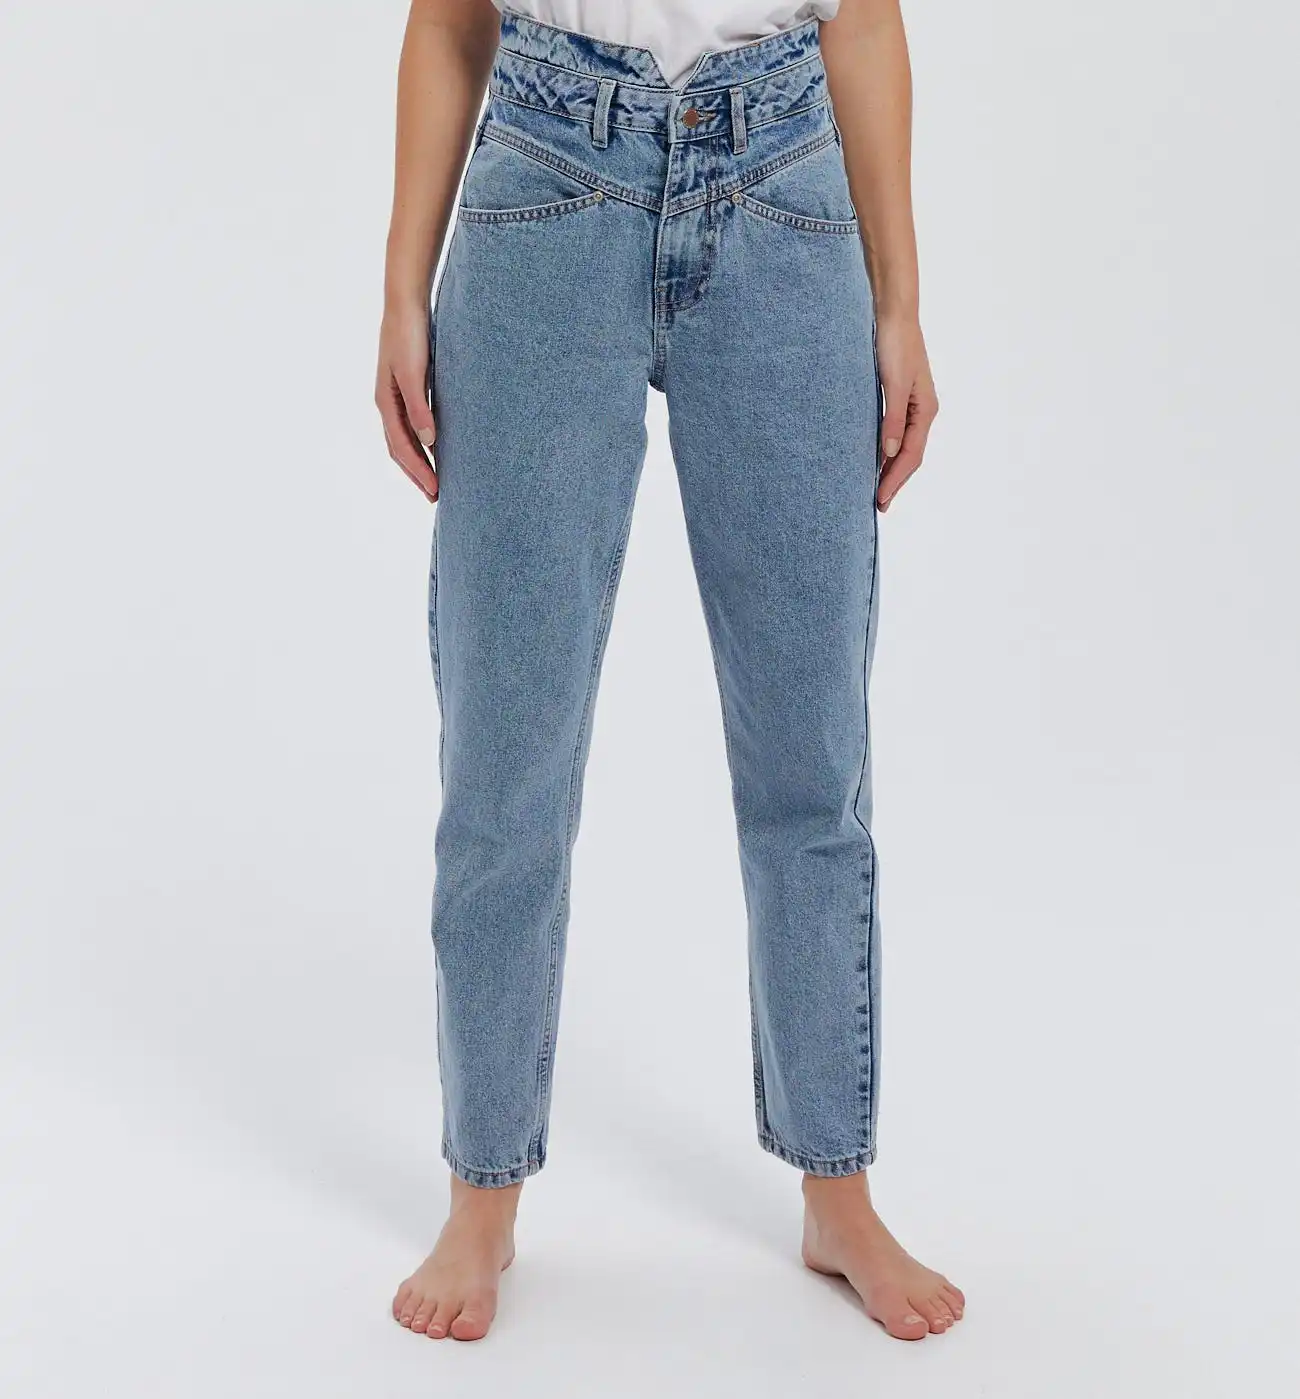 MARCEL high-waist mom jeans